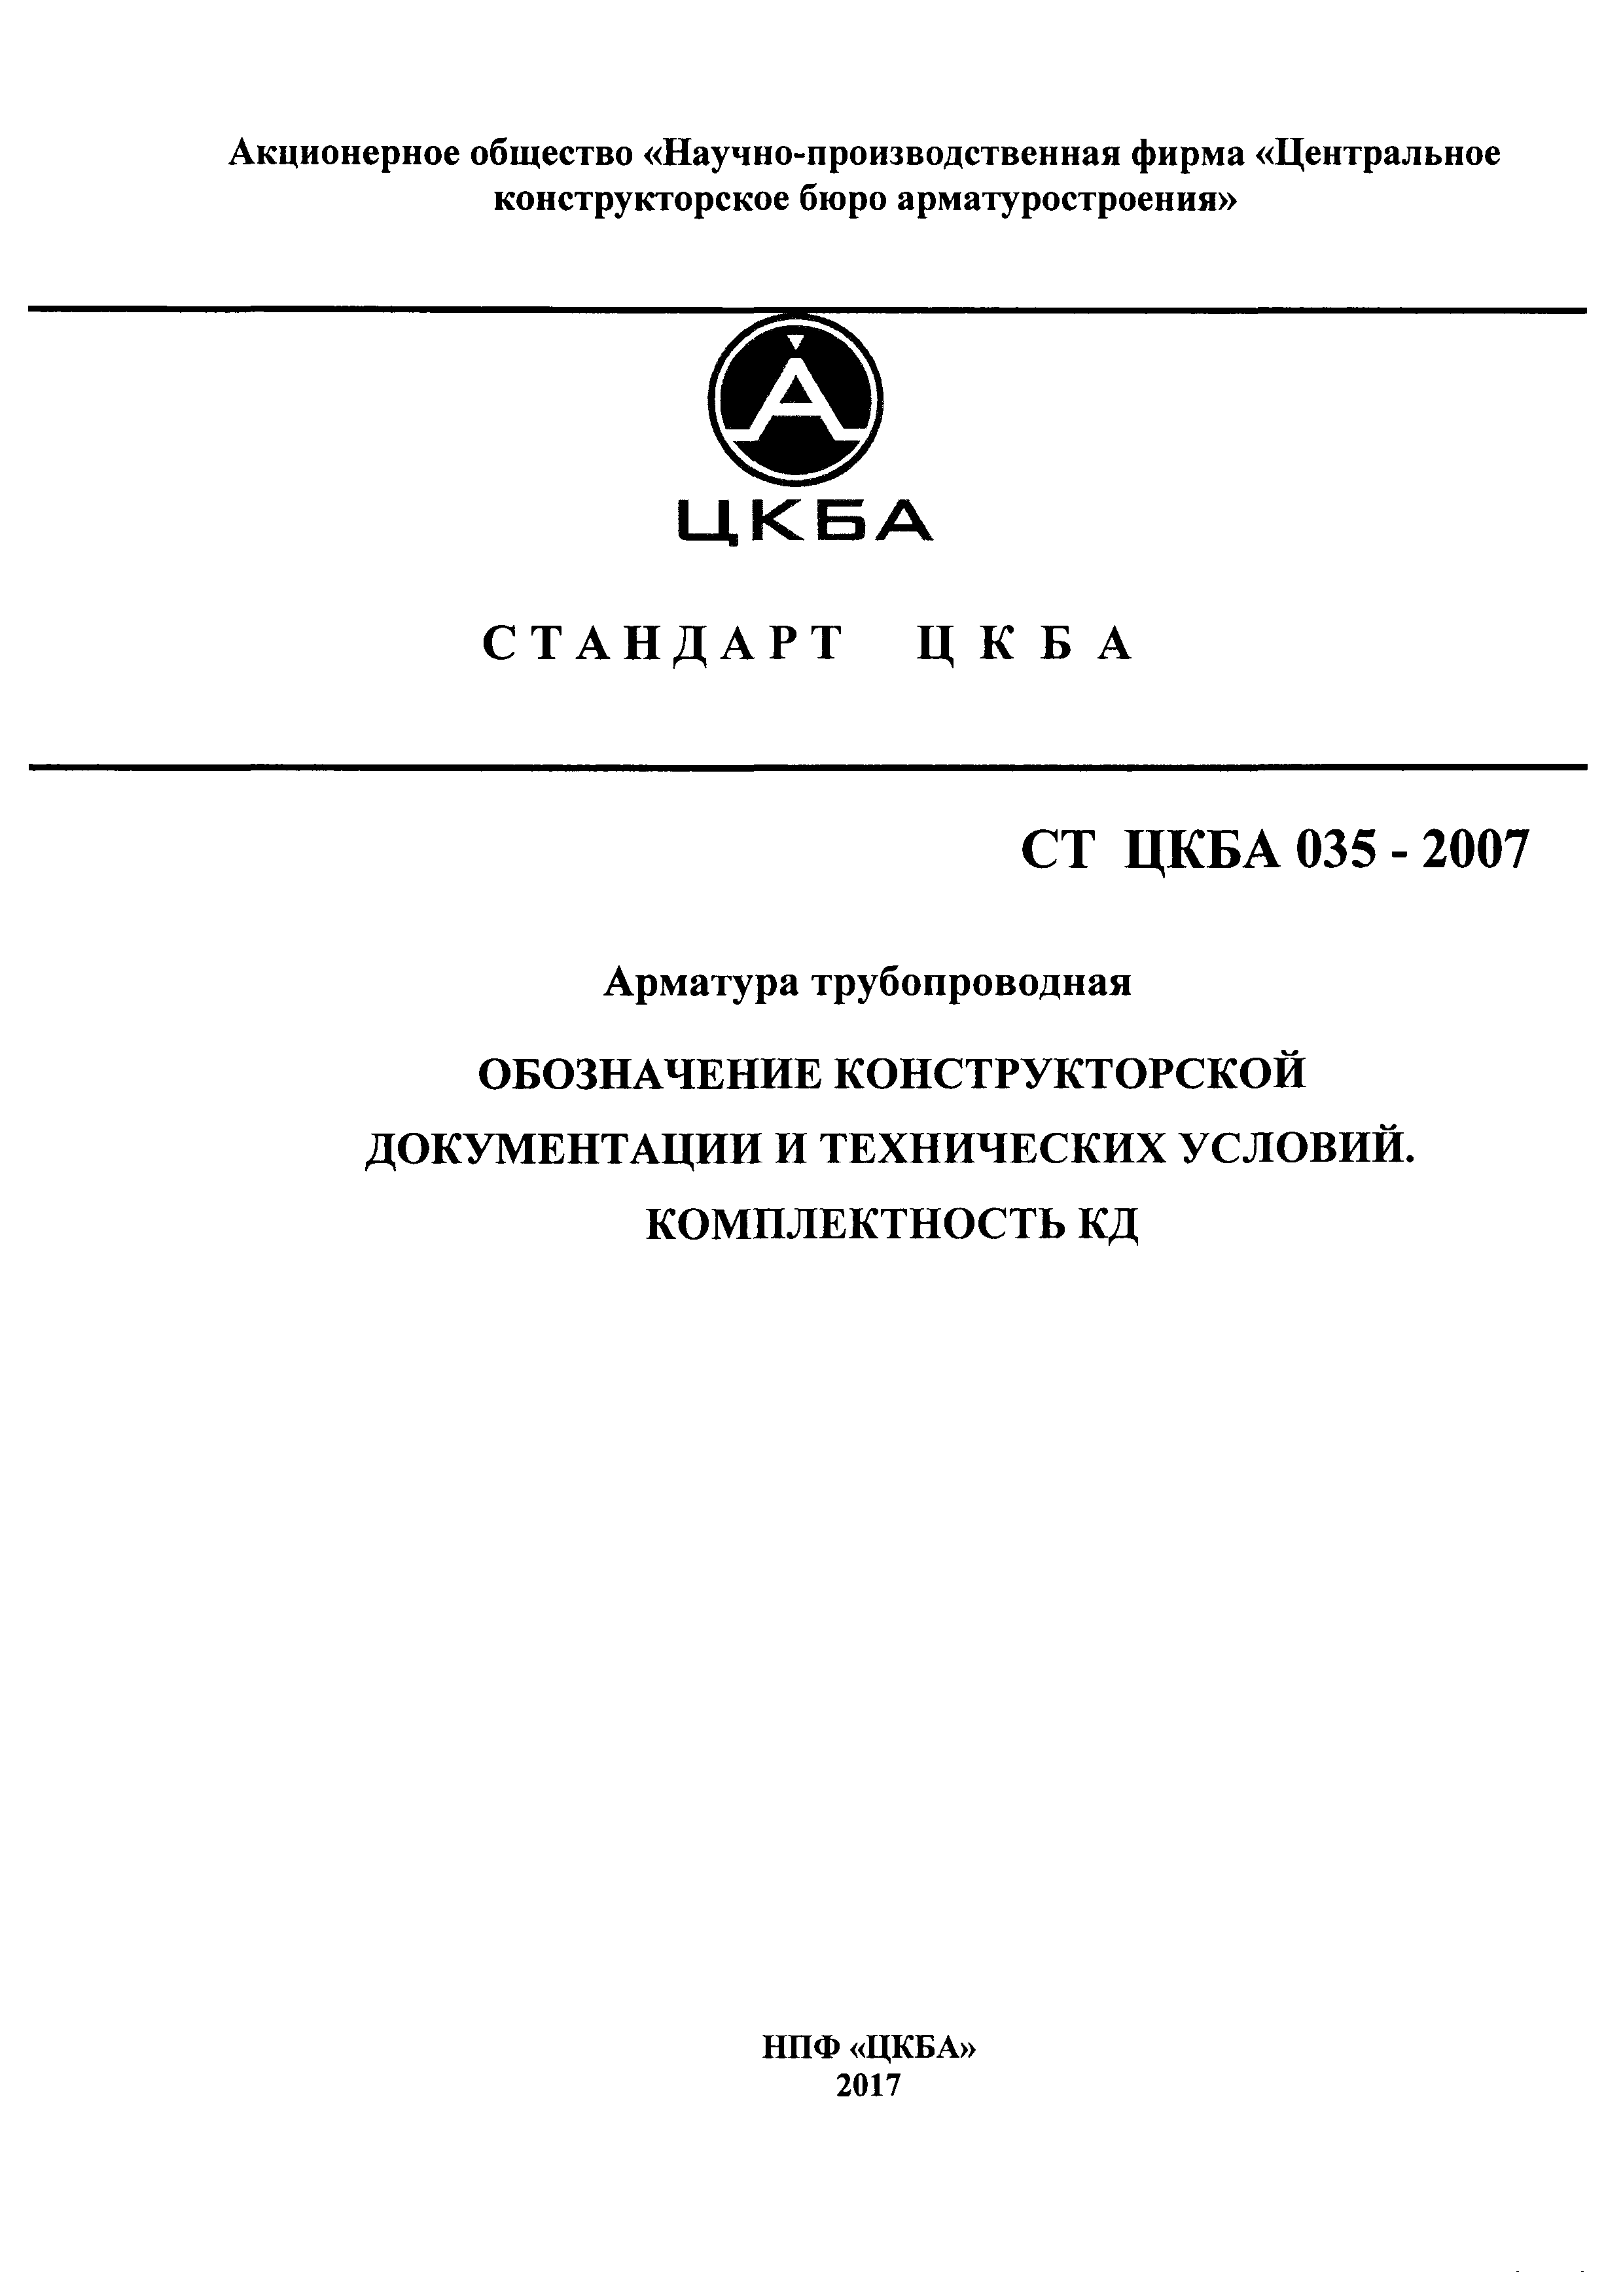 СТ ЦКБА 035-2007